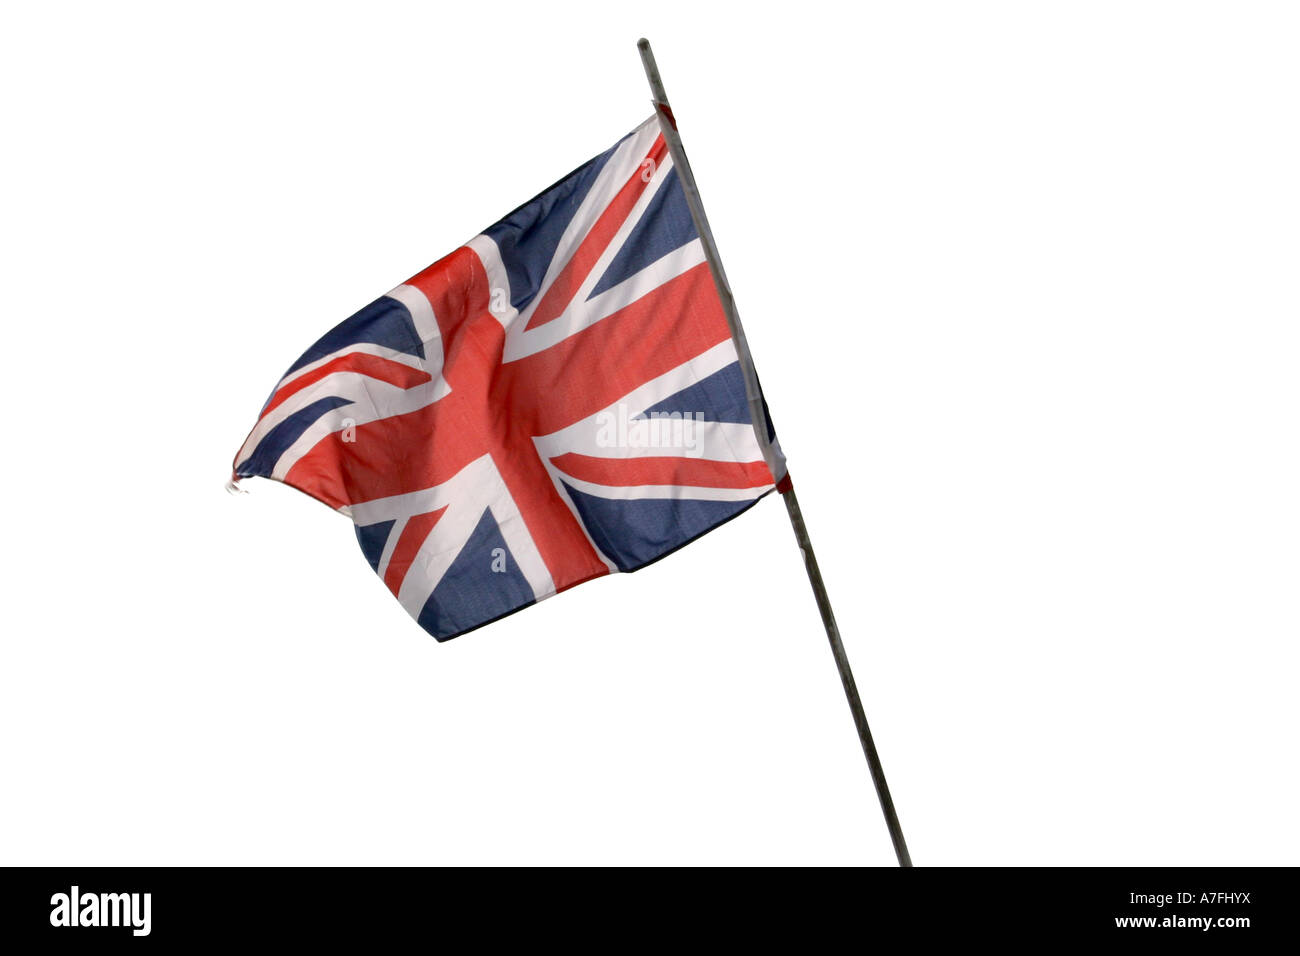 The British Union flag. Stock Photo